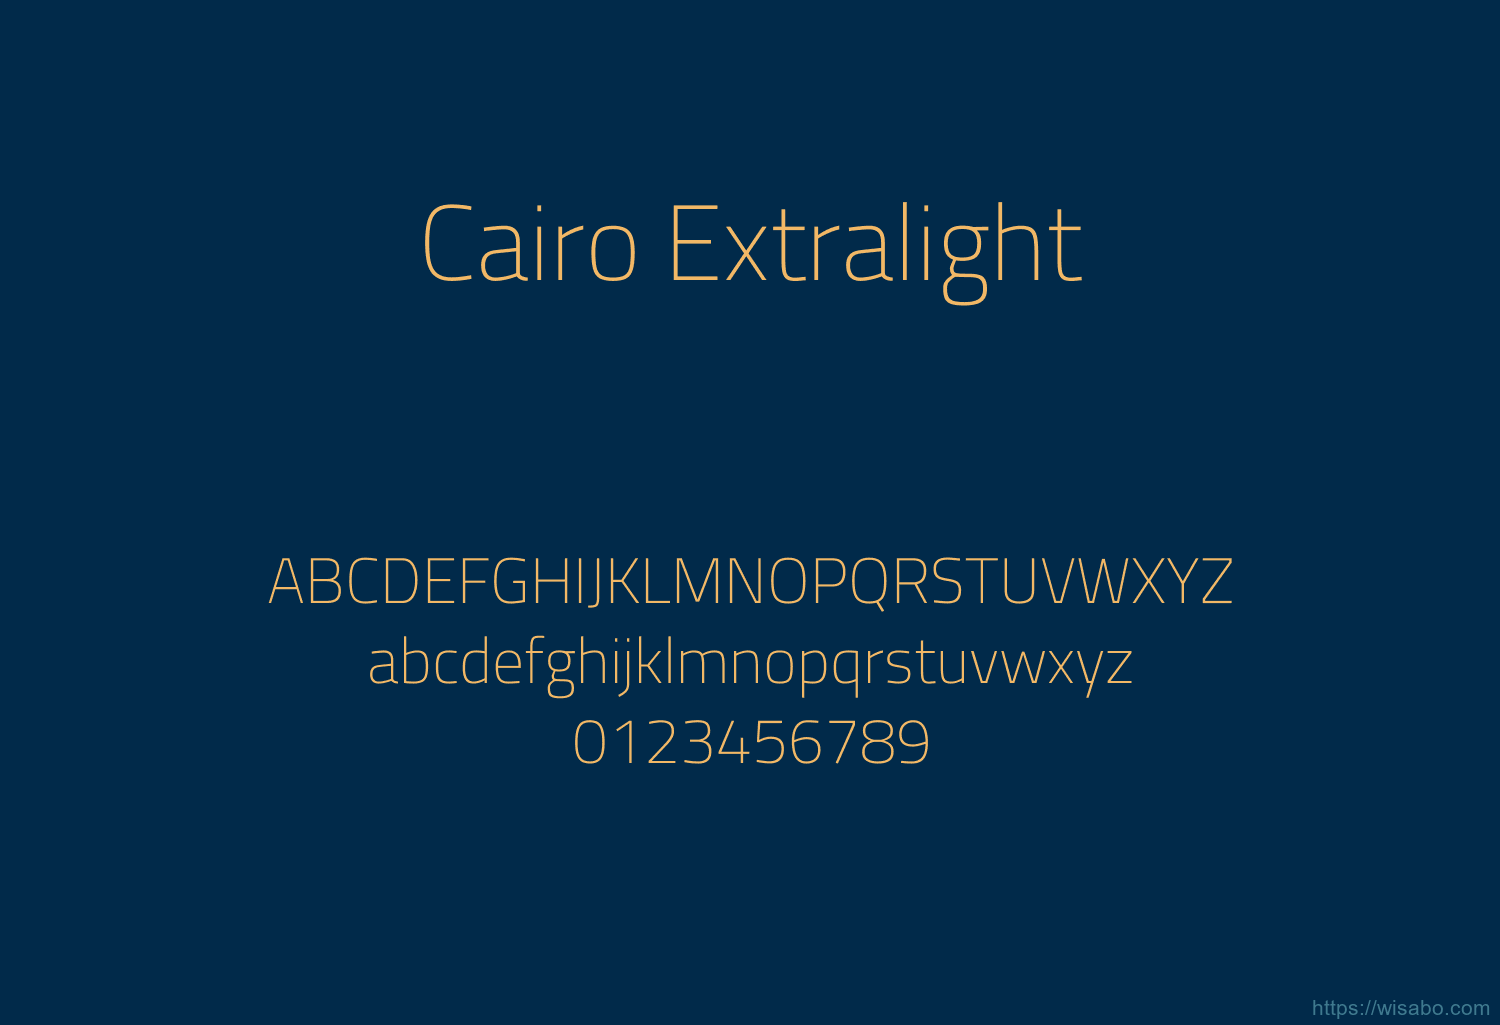 Cairo Extralight